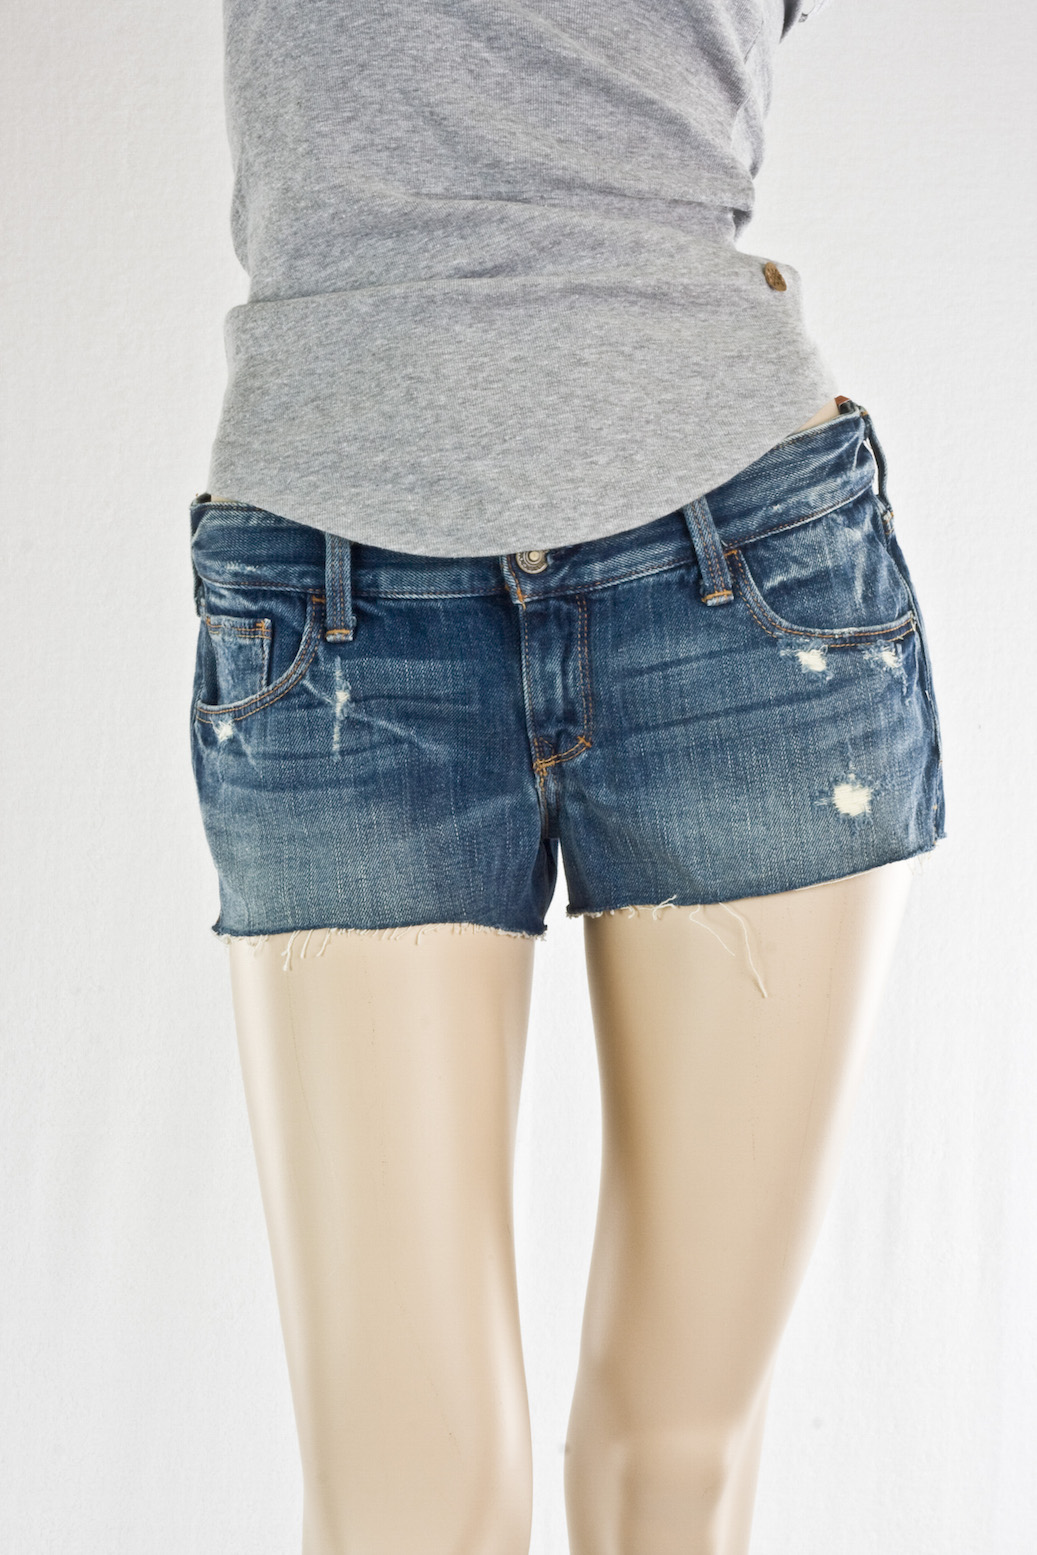 Женские джинсы Abercrombie & Fitch шорты SHORTS MEDIUM BLUE VINTAGE интернет-магазин Fashion Jeans